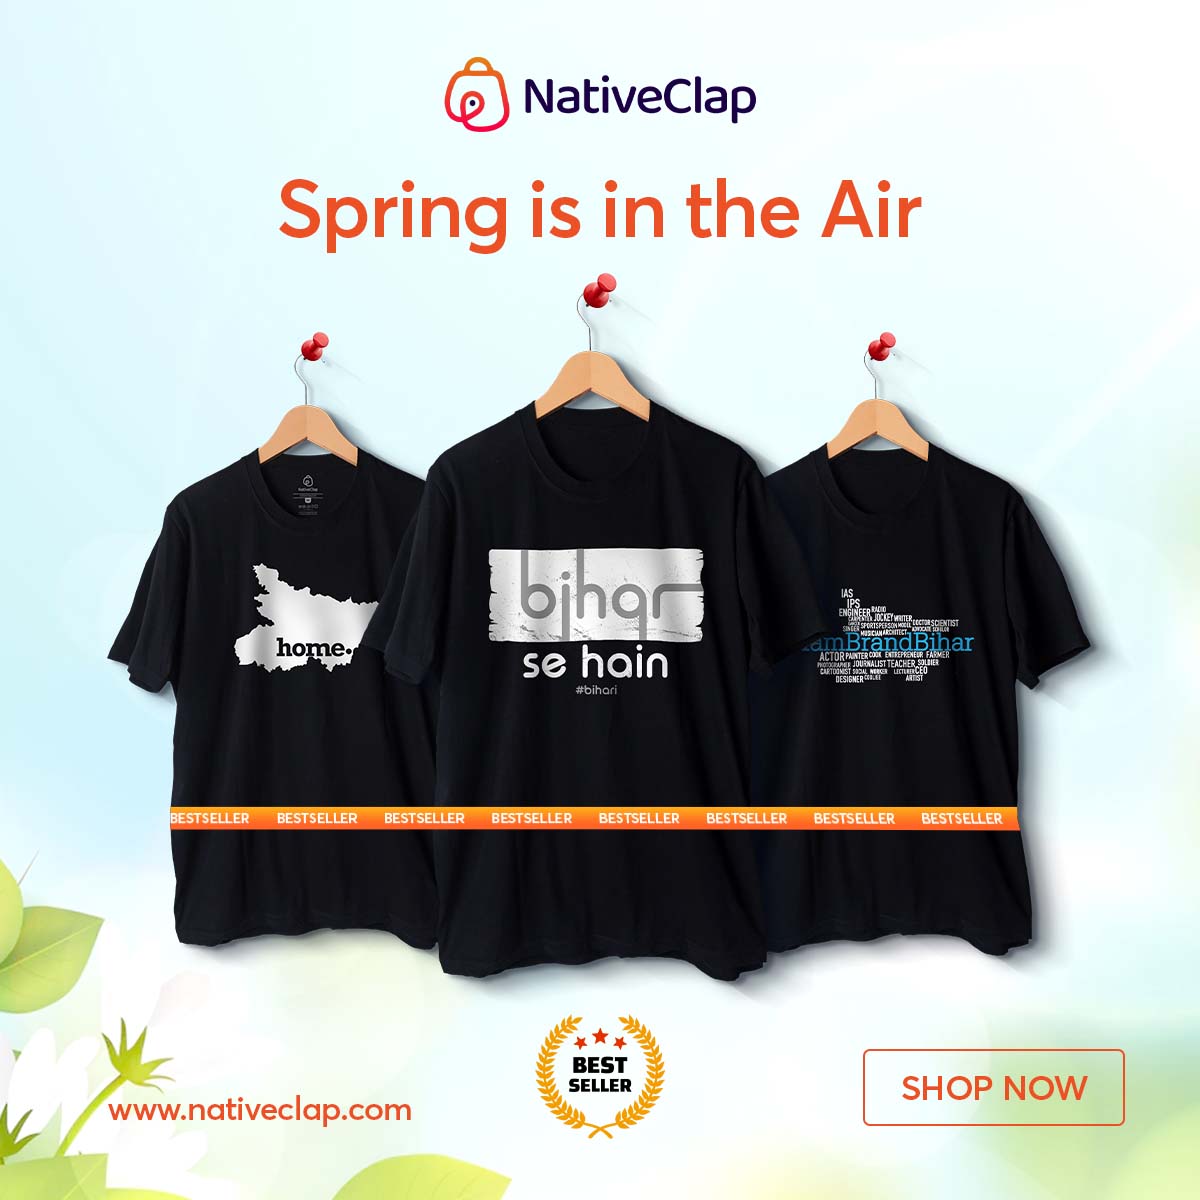 Update your wardrobe with our bestsellers👕
#spring #bestsellers #tshirts #ootd #fashionposts #graphictees #nativeclap #madeinbihar #patnabihar #slangs